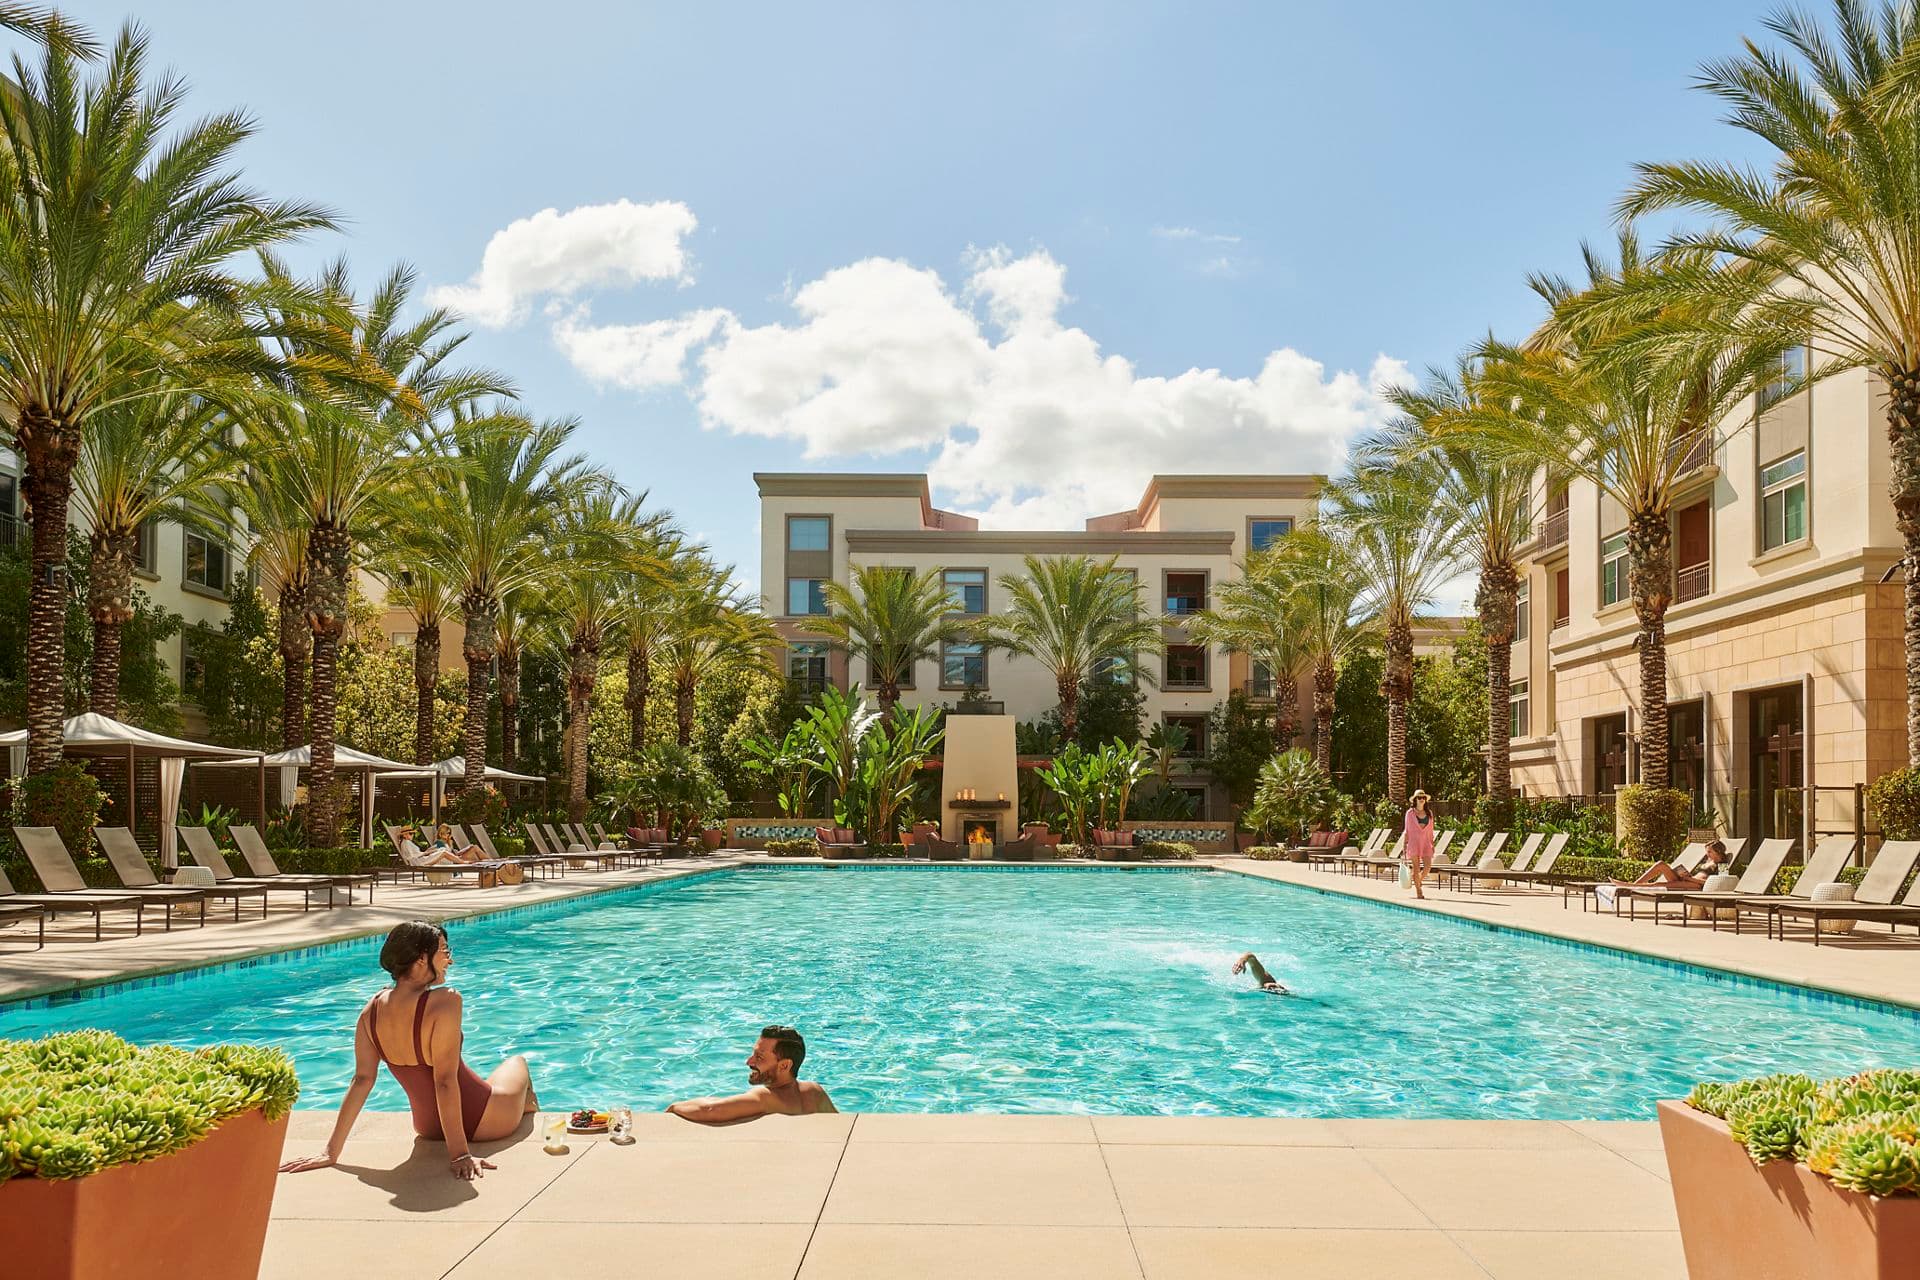 Exterior view of pool at Centerpointe at Irvine Spectrum Apartment Homes in Irvine, CA.